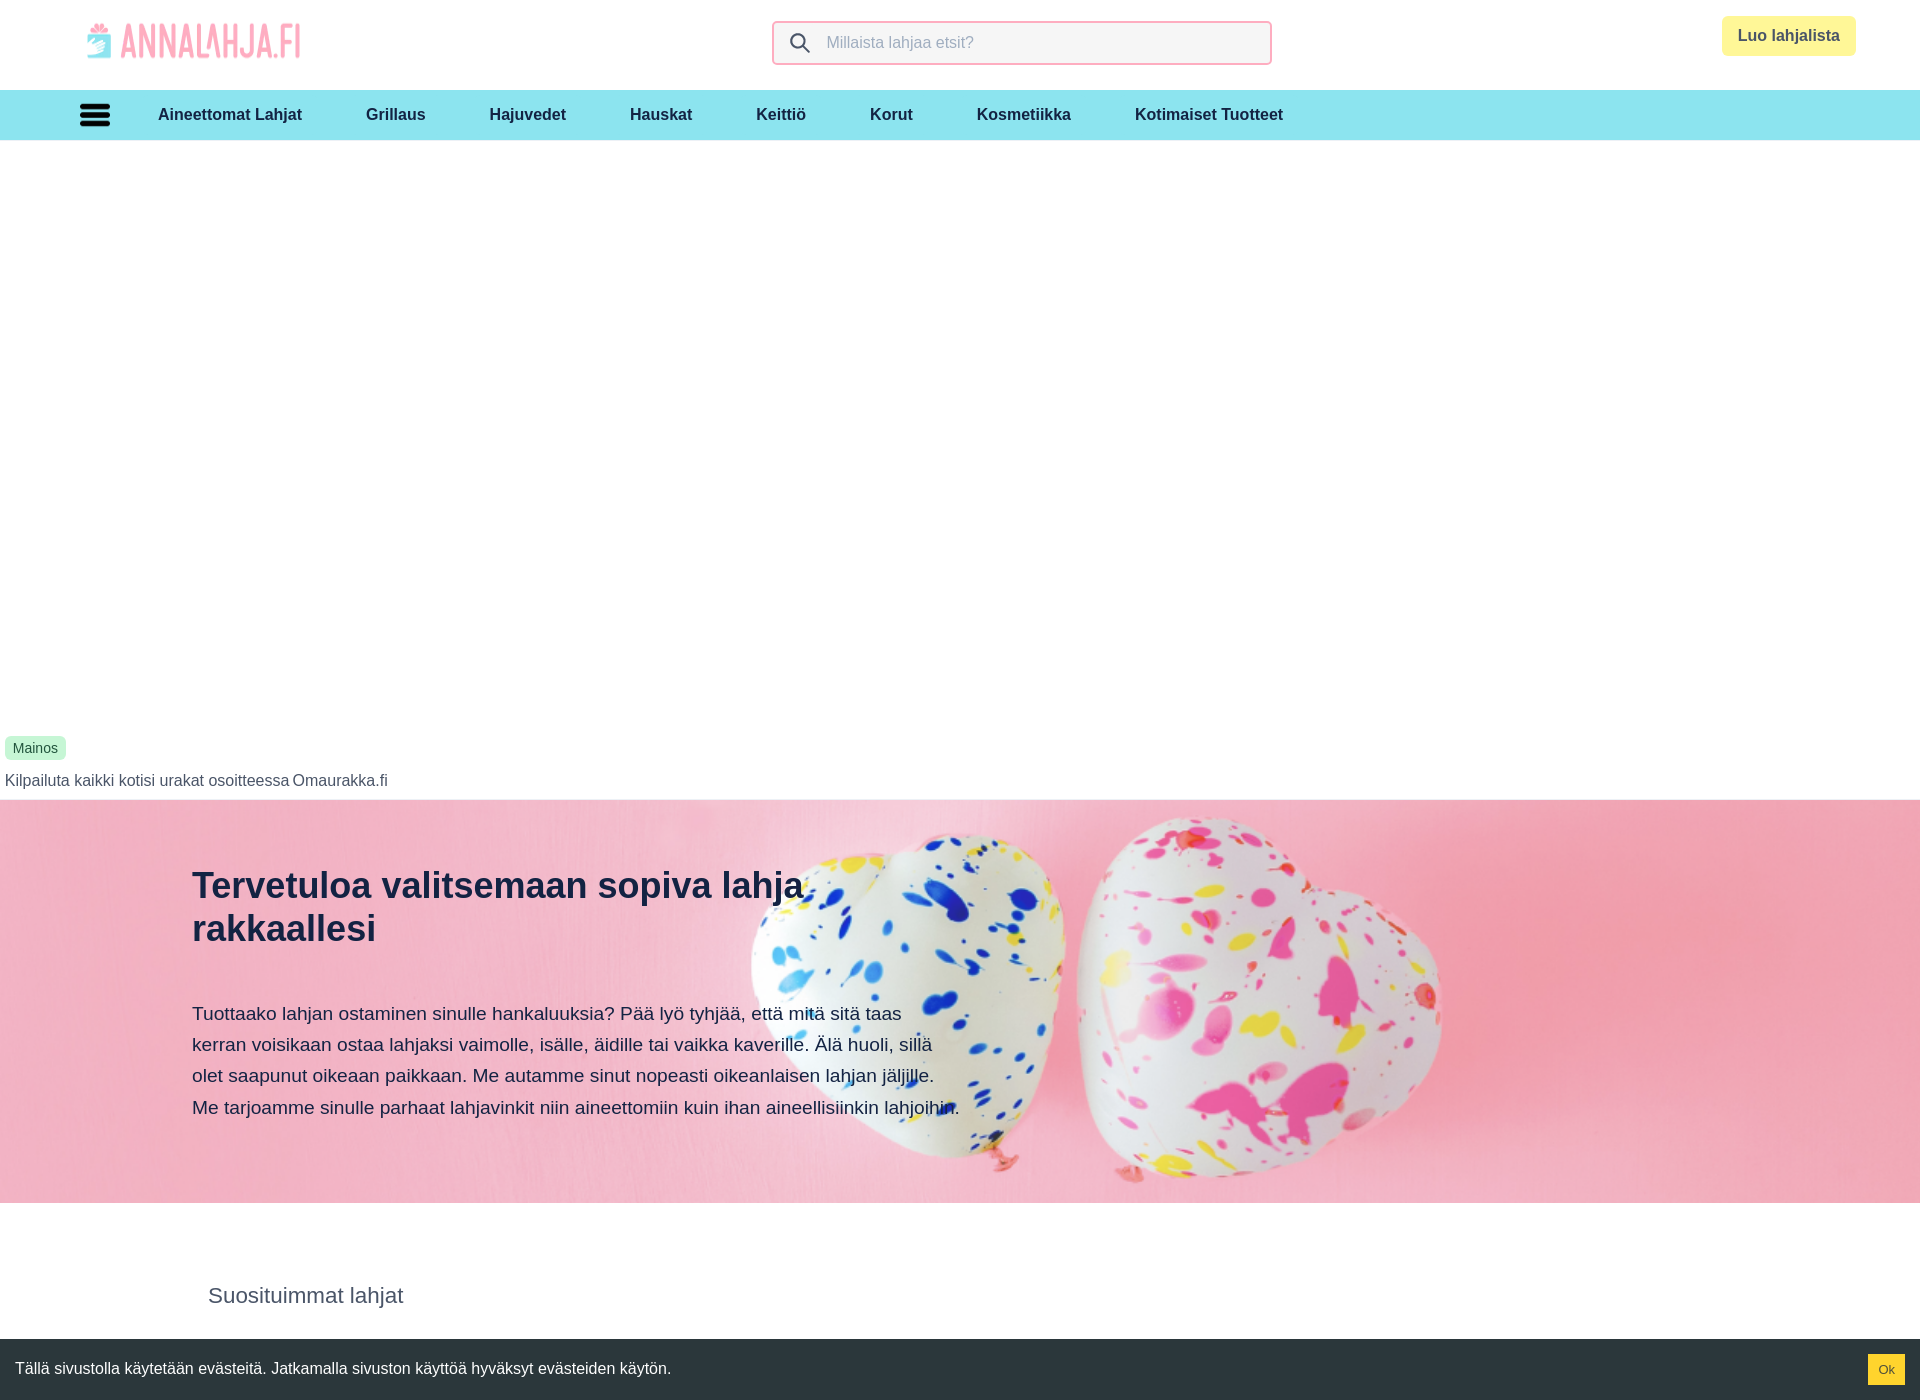 Skärmdump för annalahja.fi